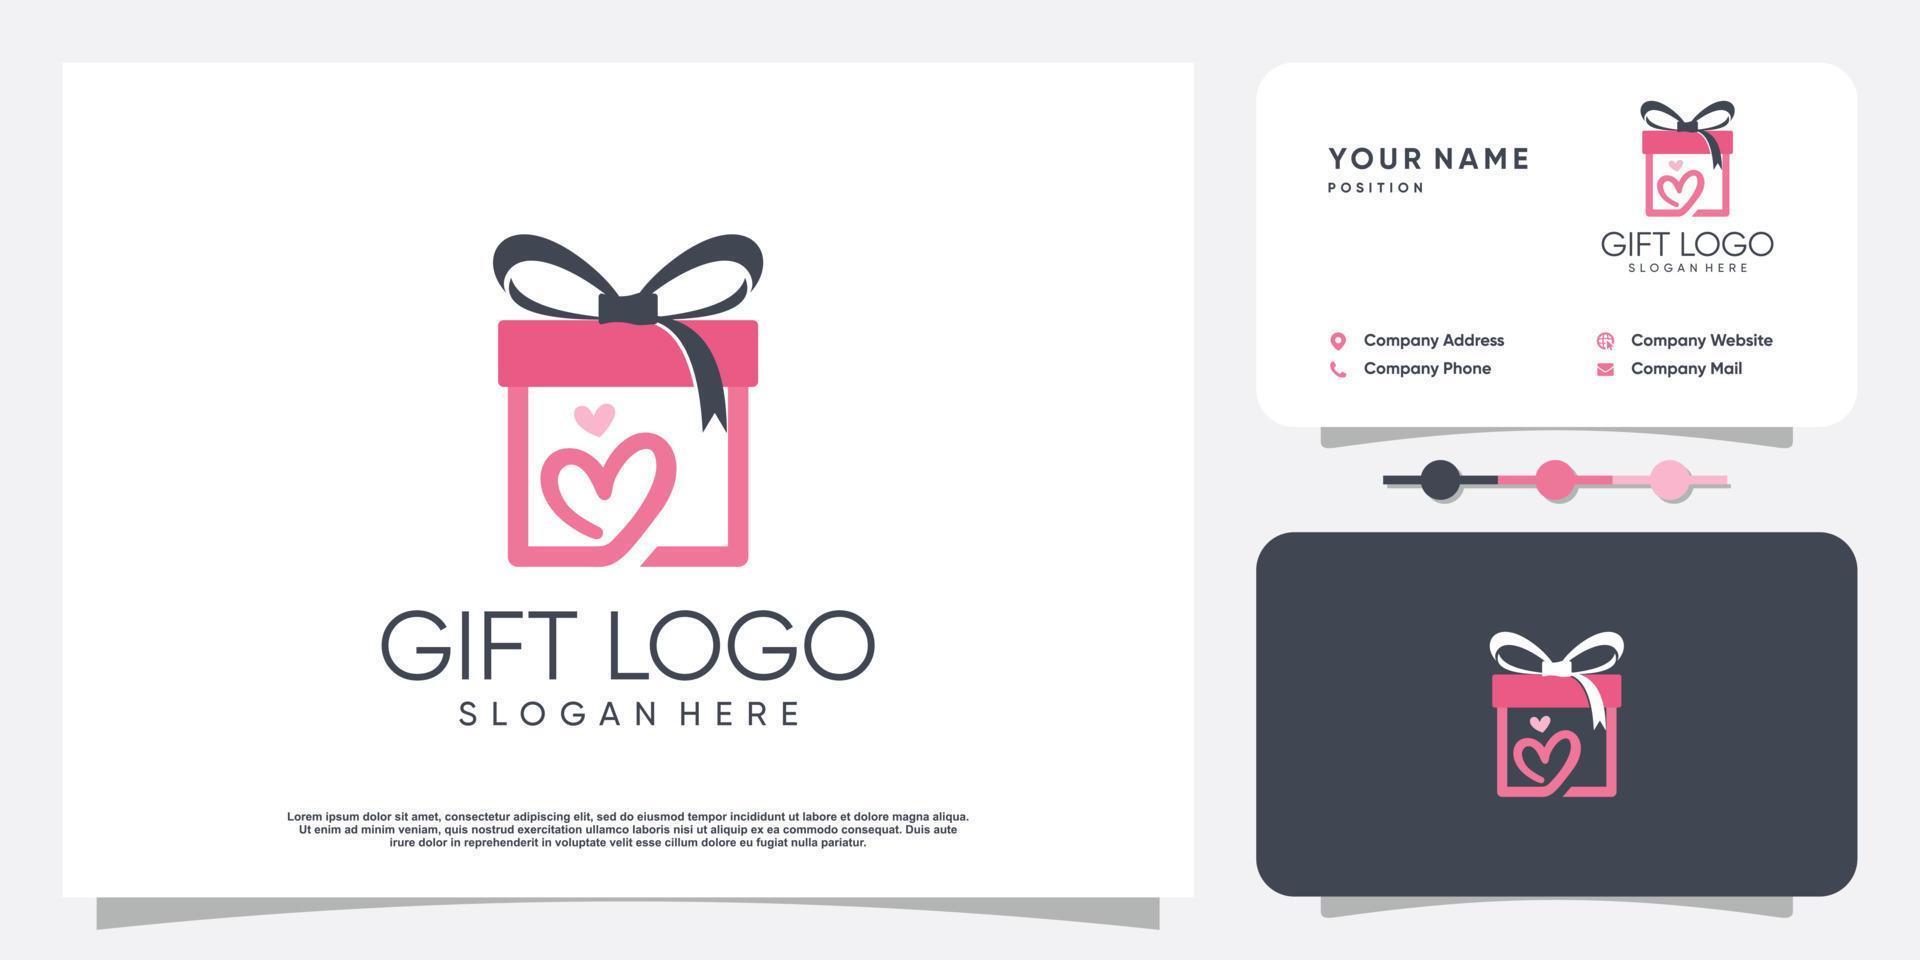 Gift logo design vector with creative modern concept style